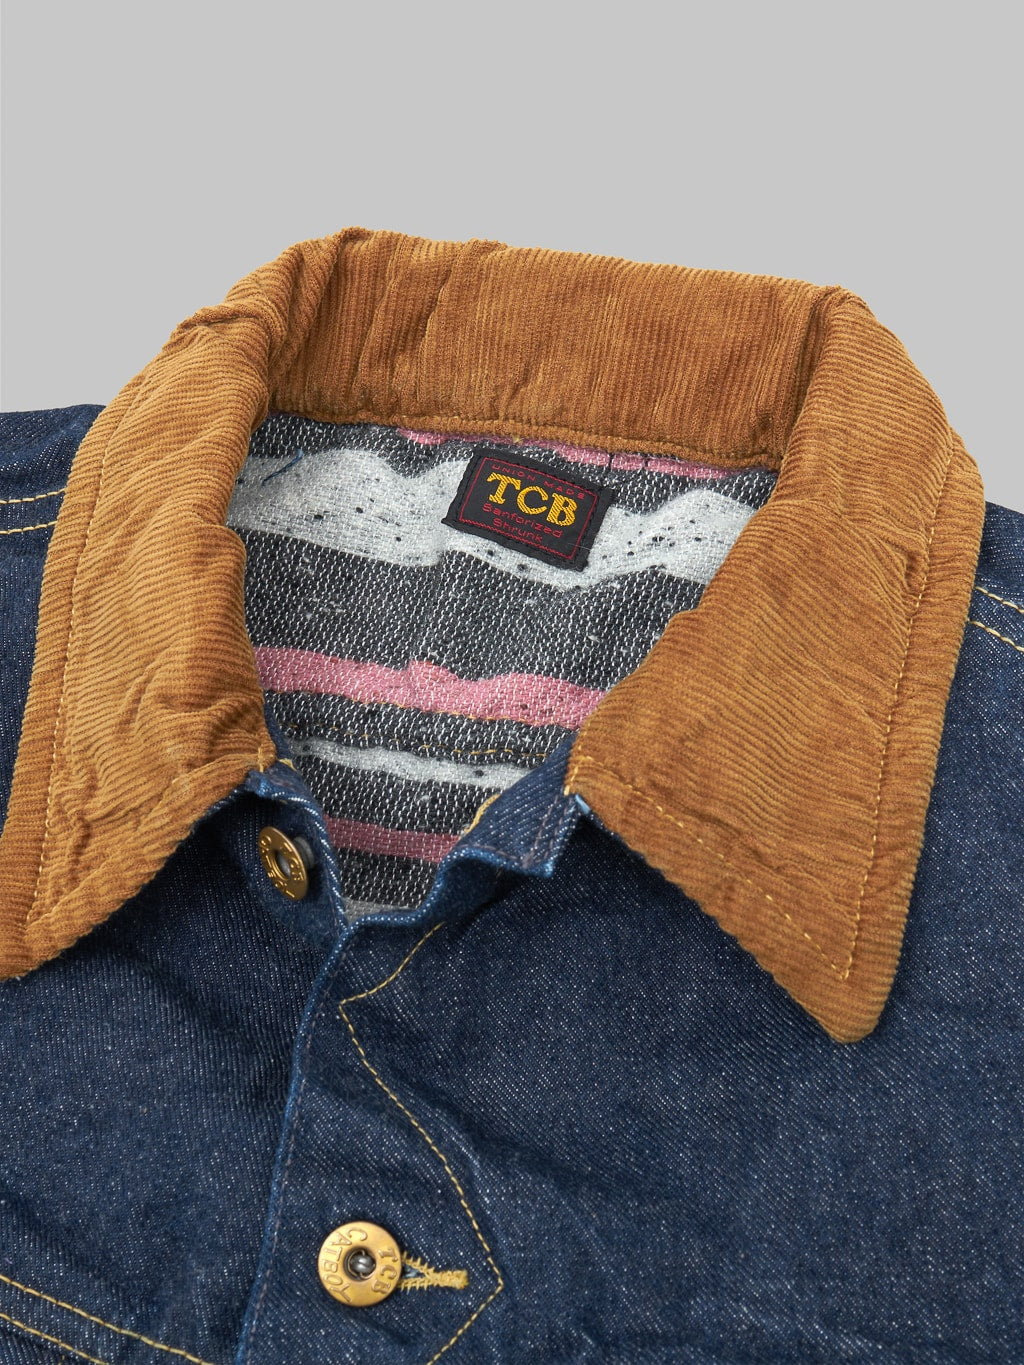 TCB Storm Cats Drive selvedge denim Jacket curdoy collar